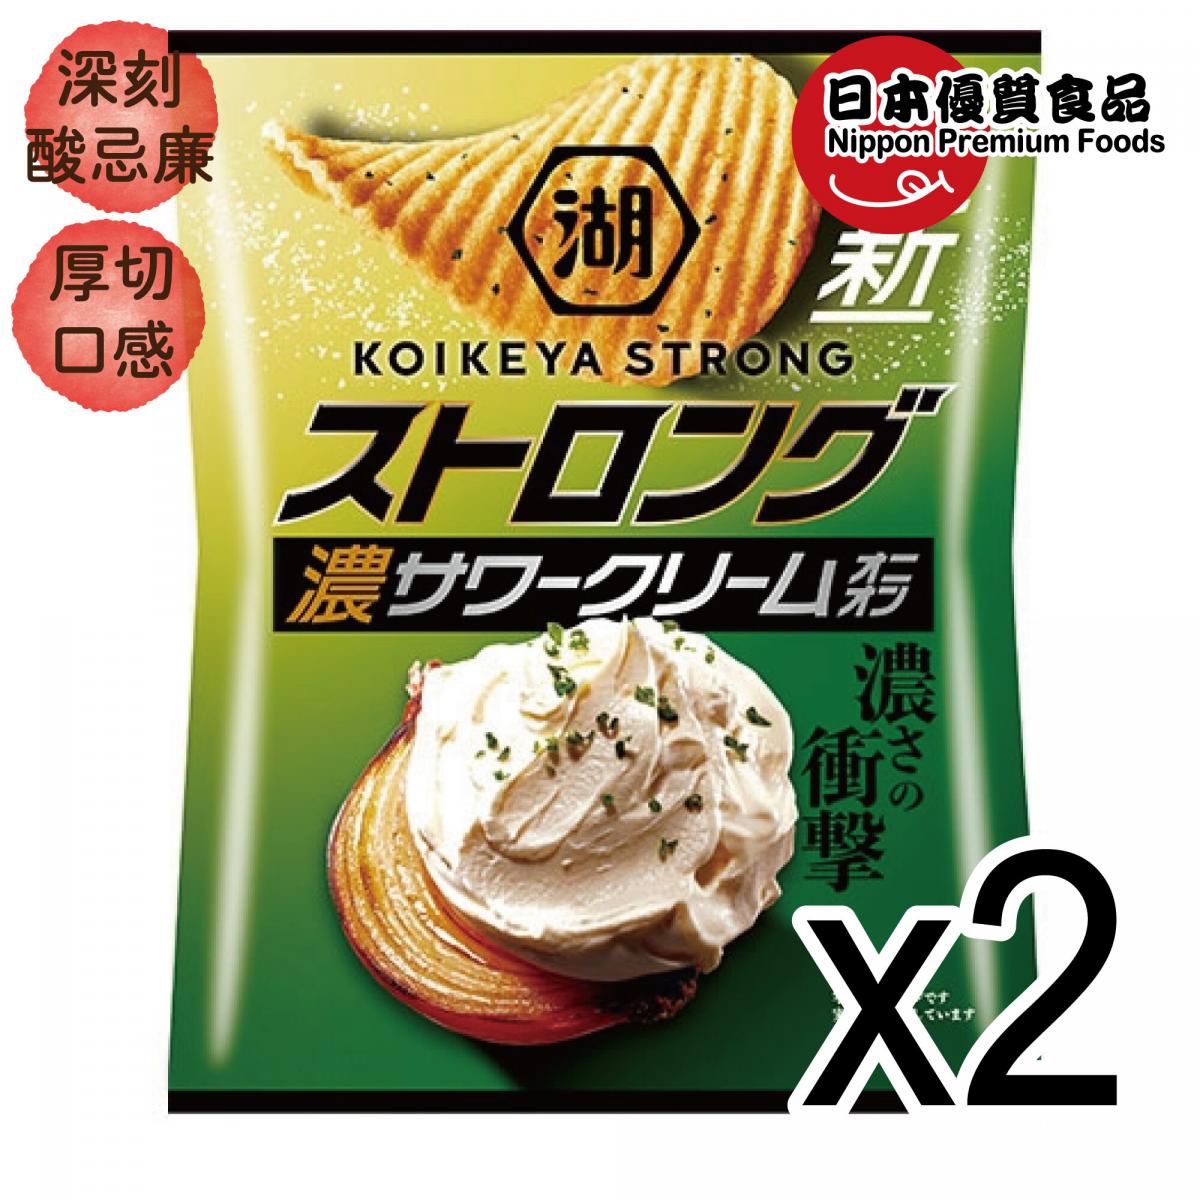 Japan Potato Chips Sour Cream & Onion Flavor 2 Packs  [Random Packing]